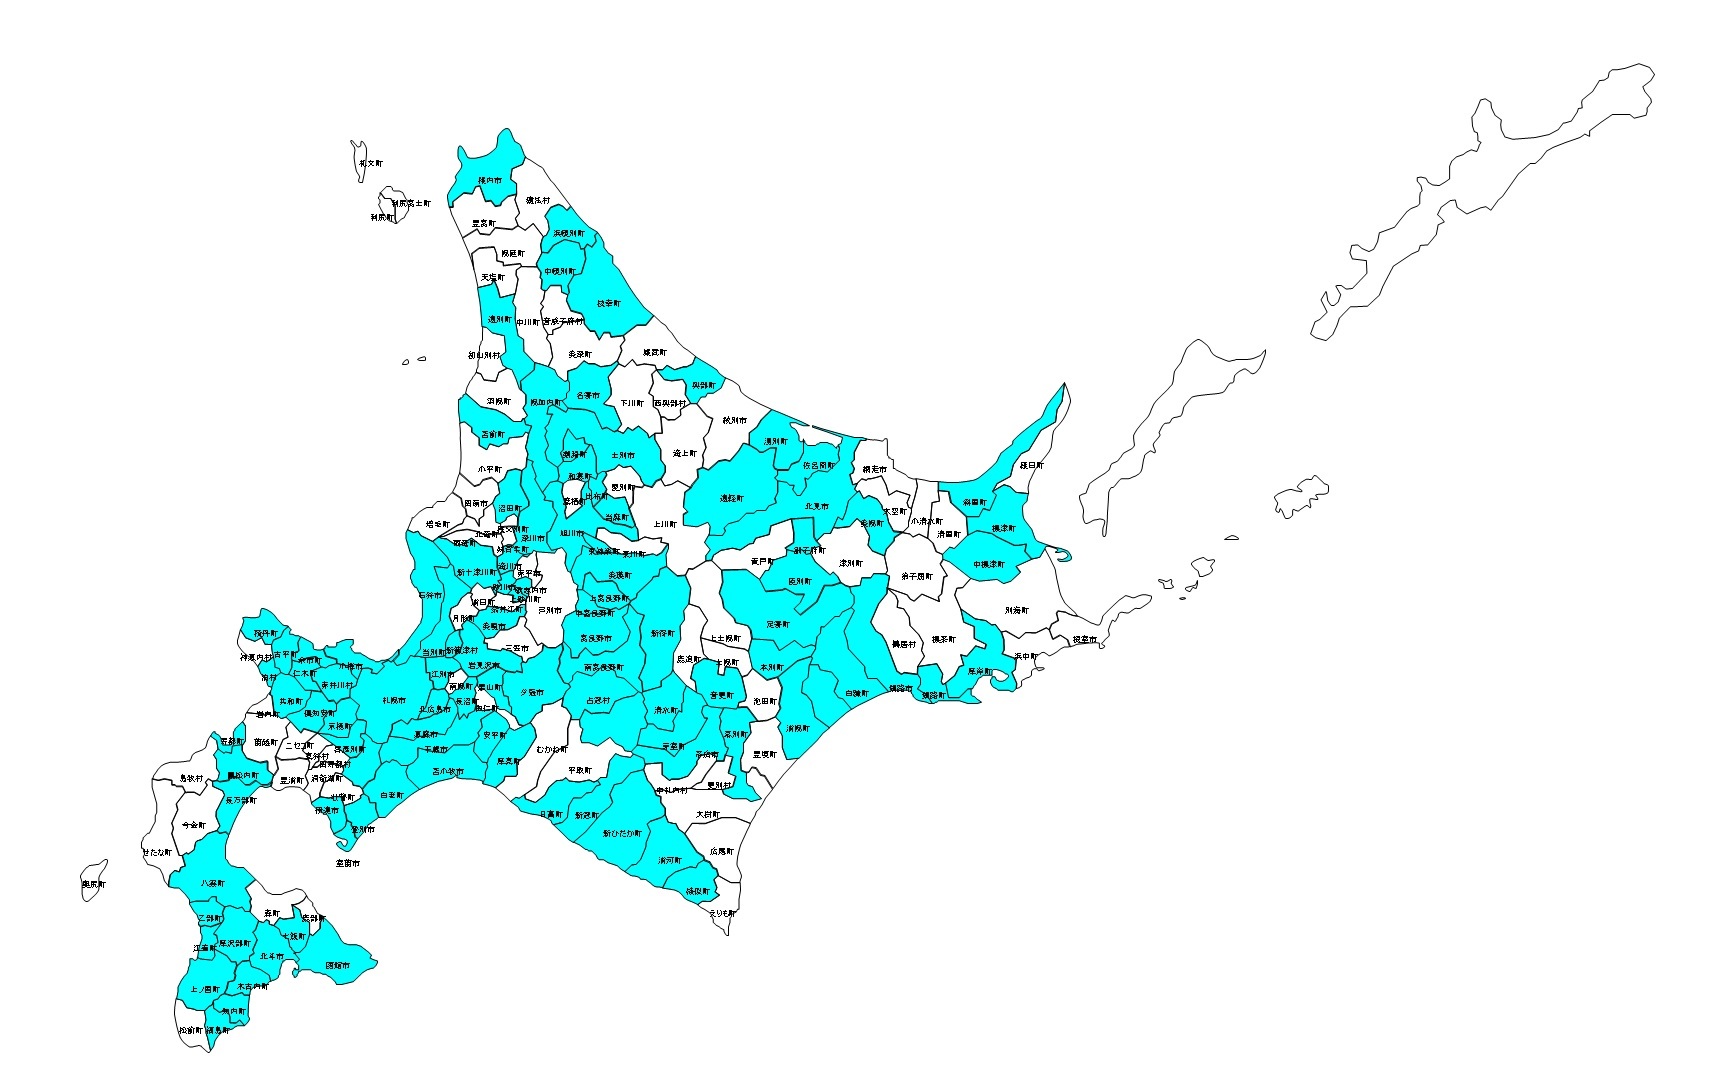 図面(102市町村に増加).jpg